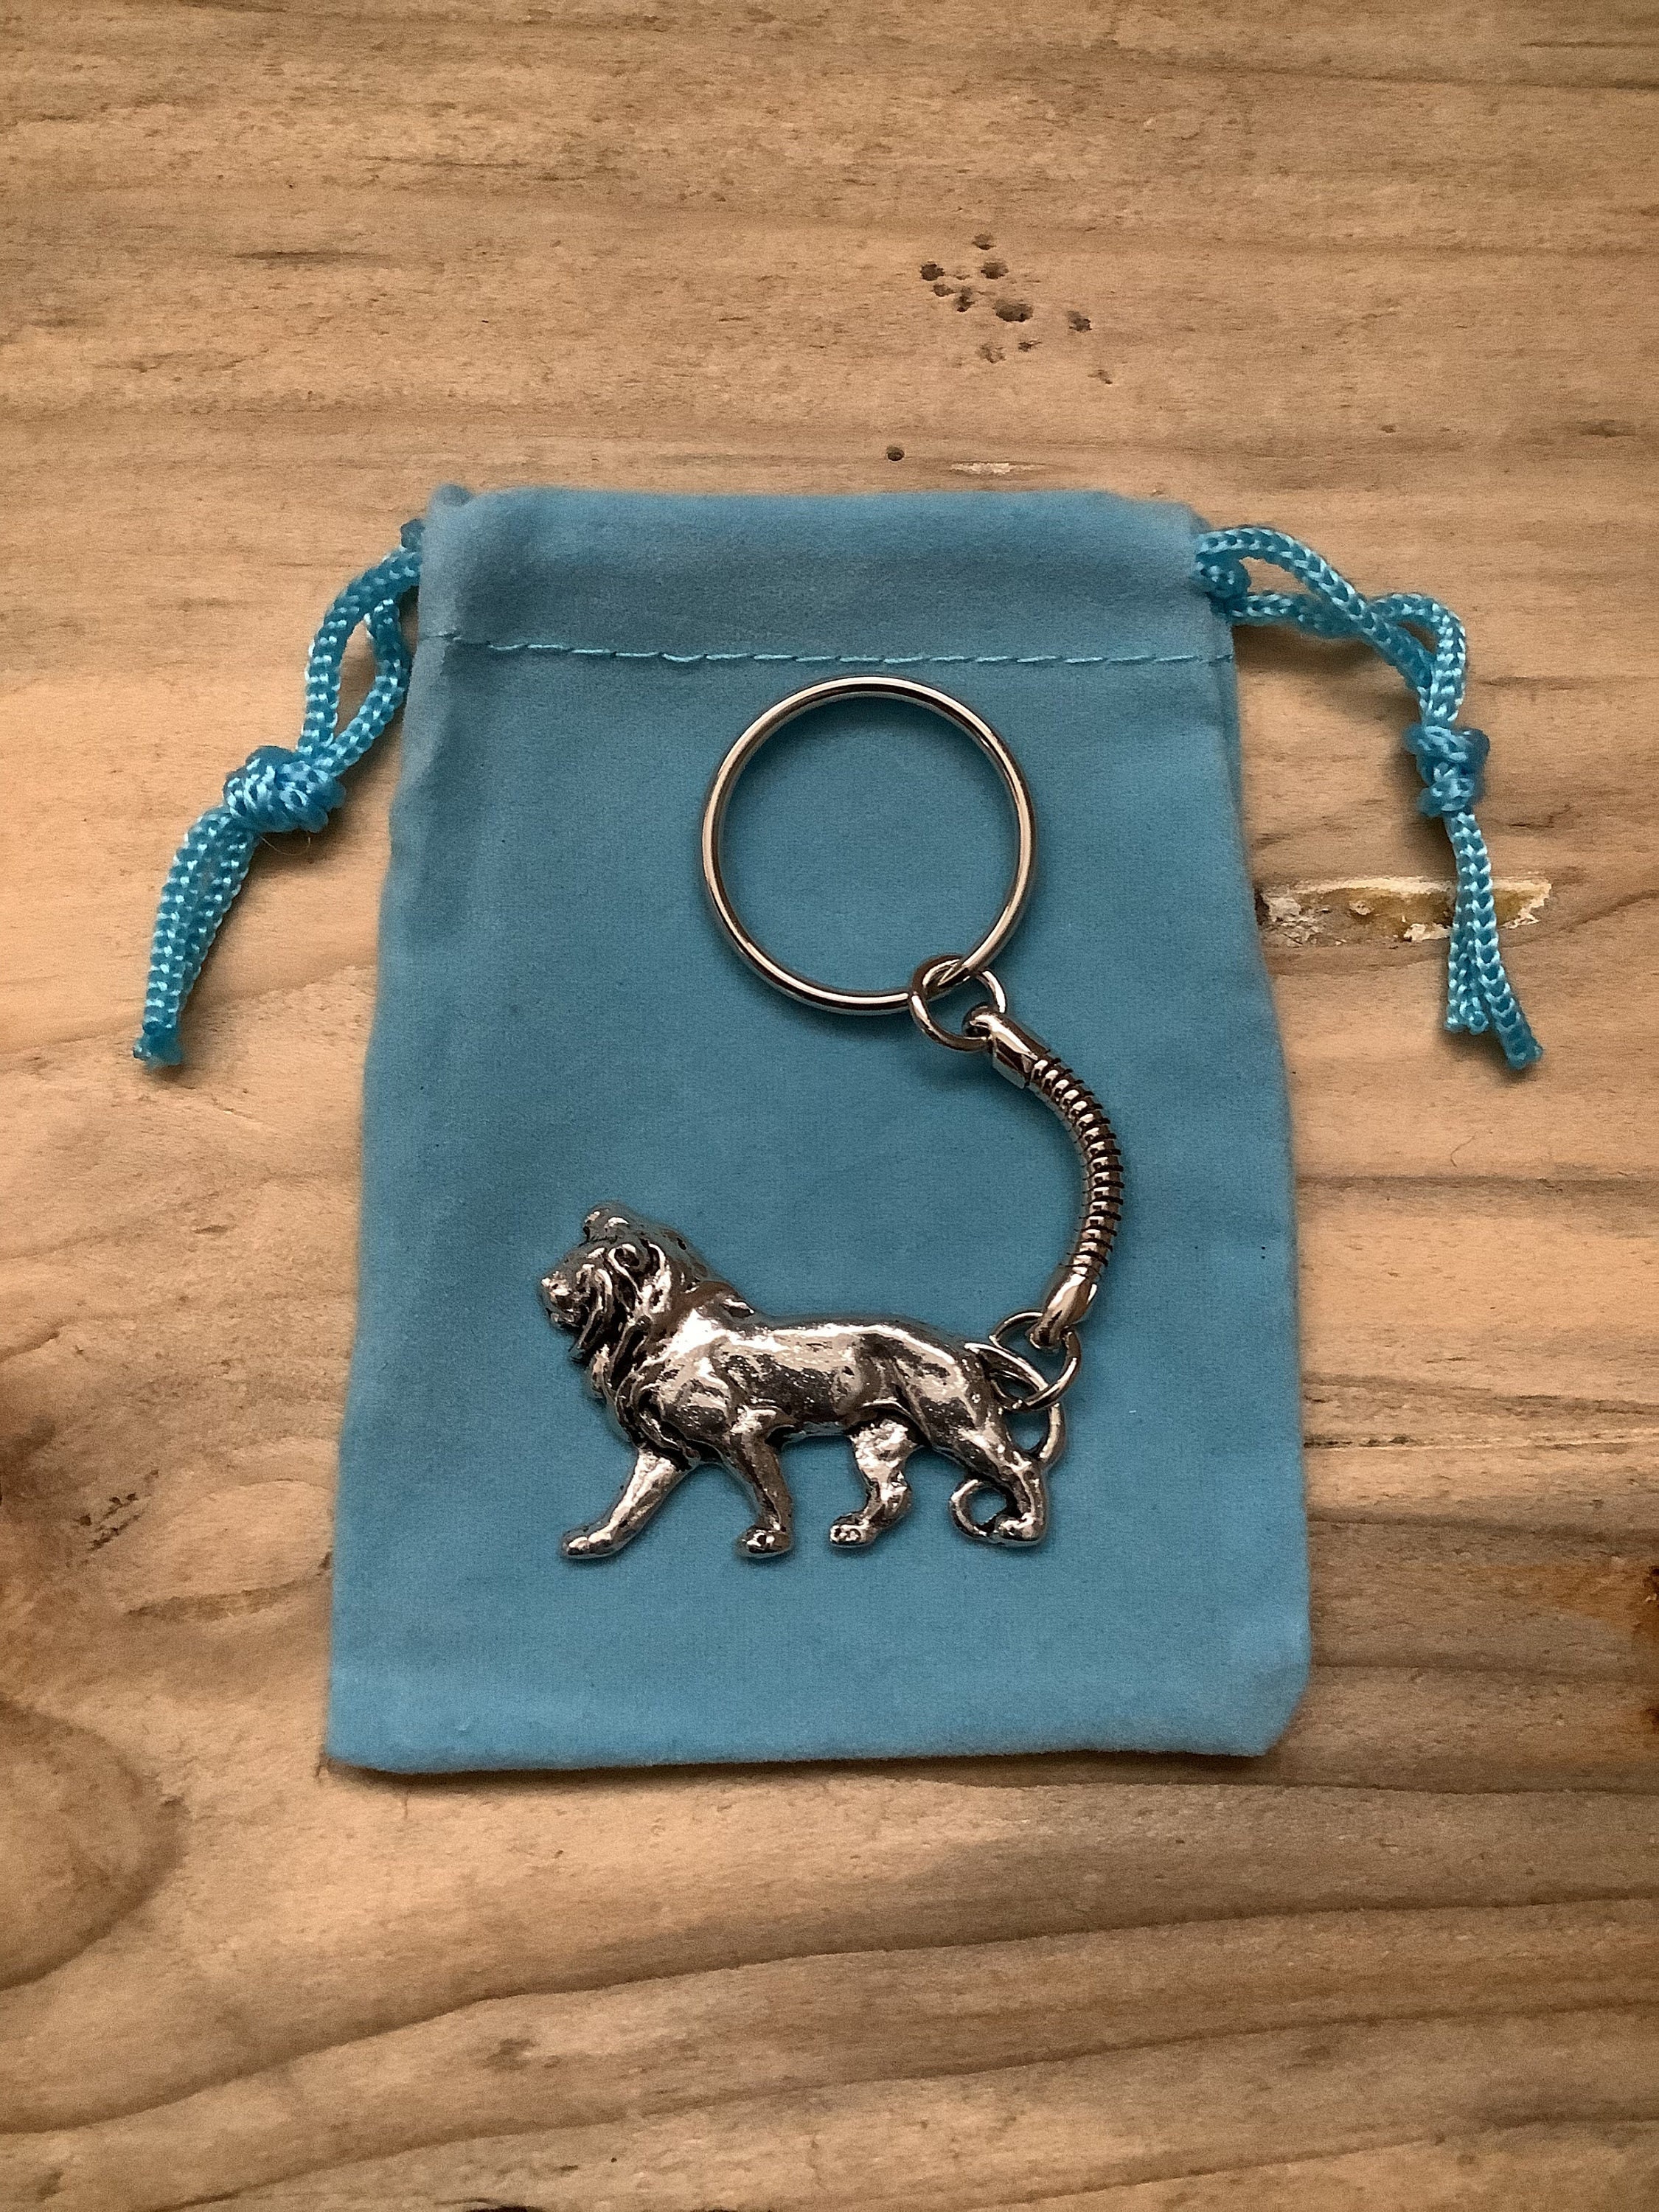 Louis Vuitton Lion shape Animal key chain for 2020 Christmas gift